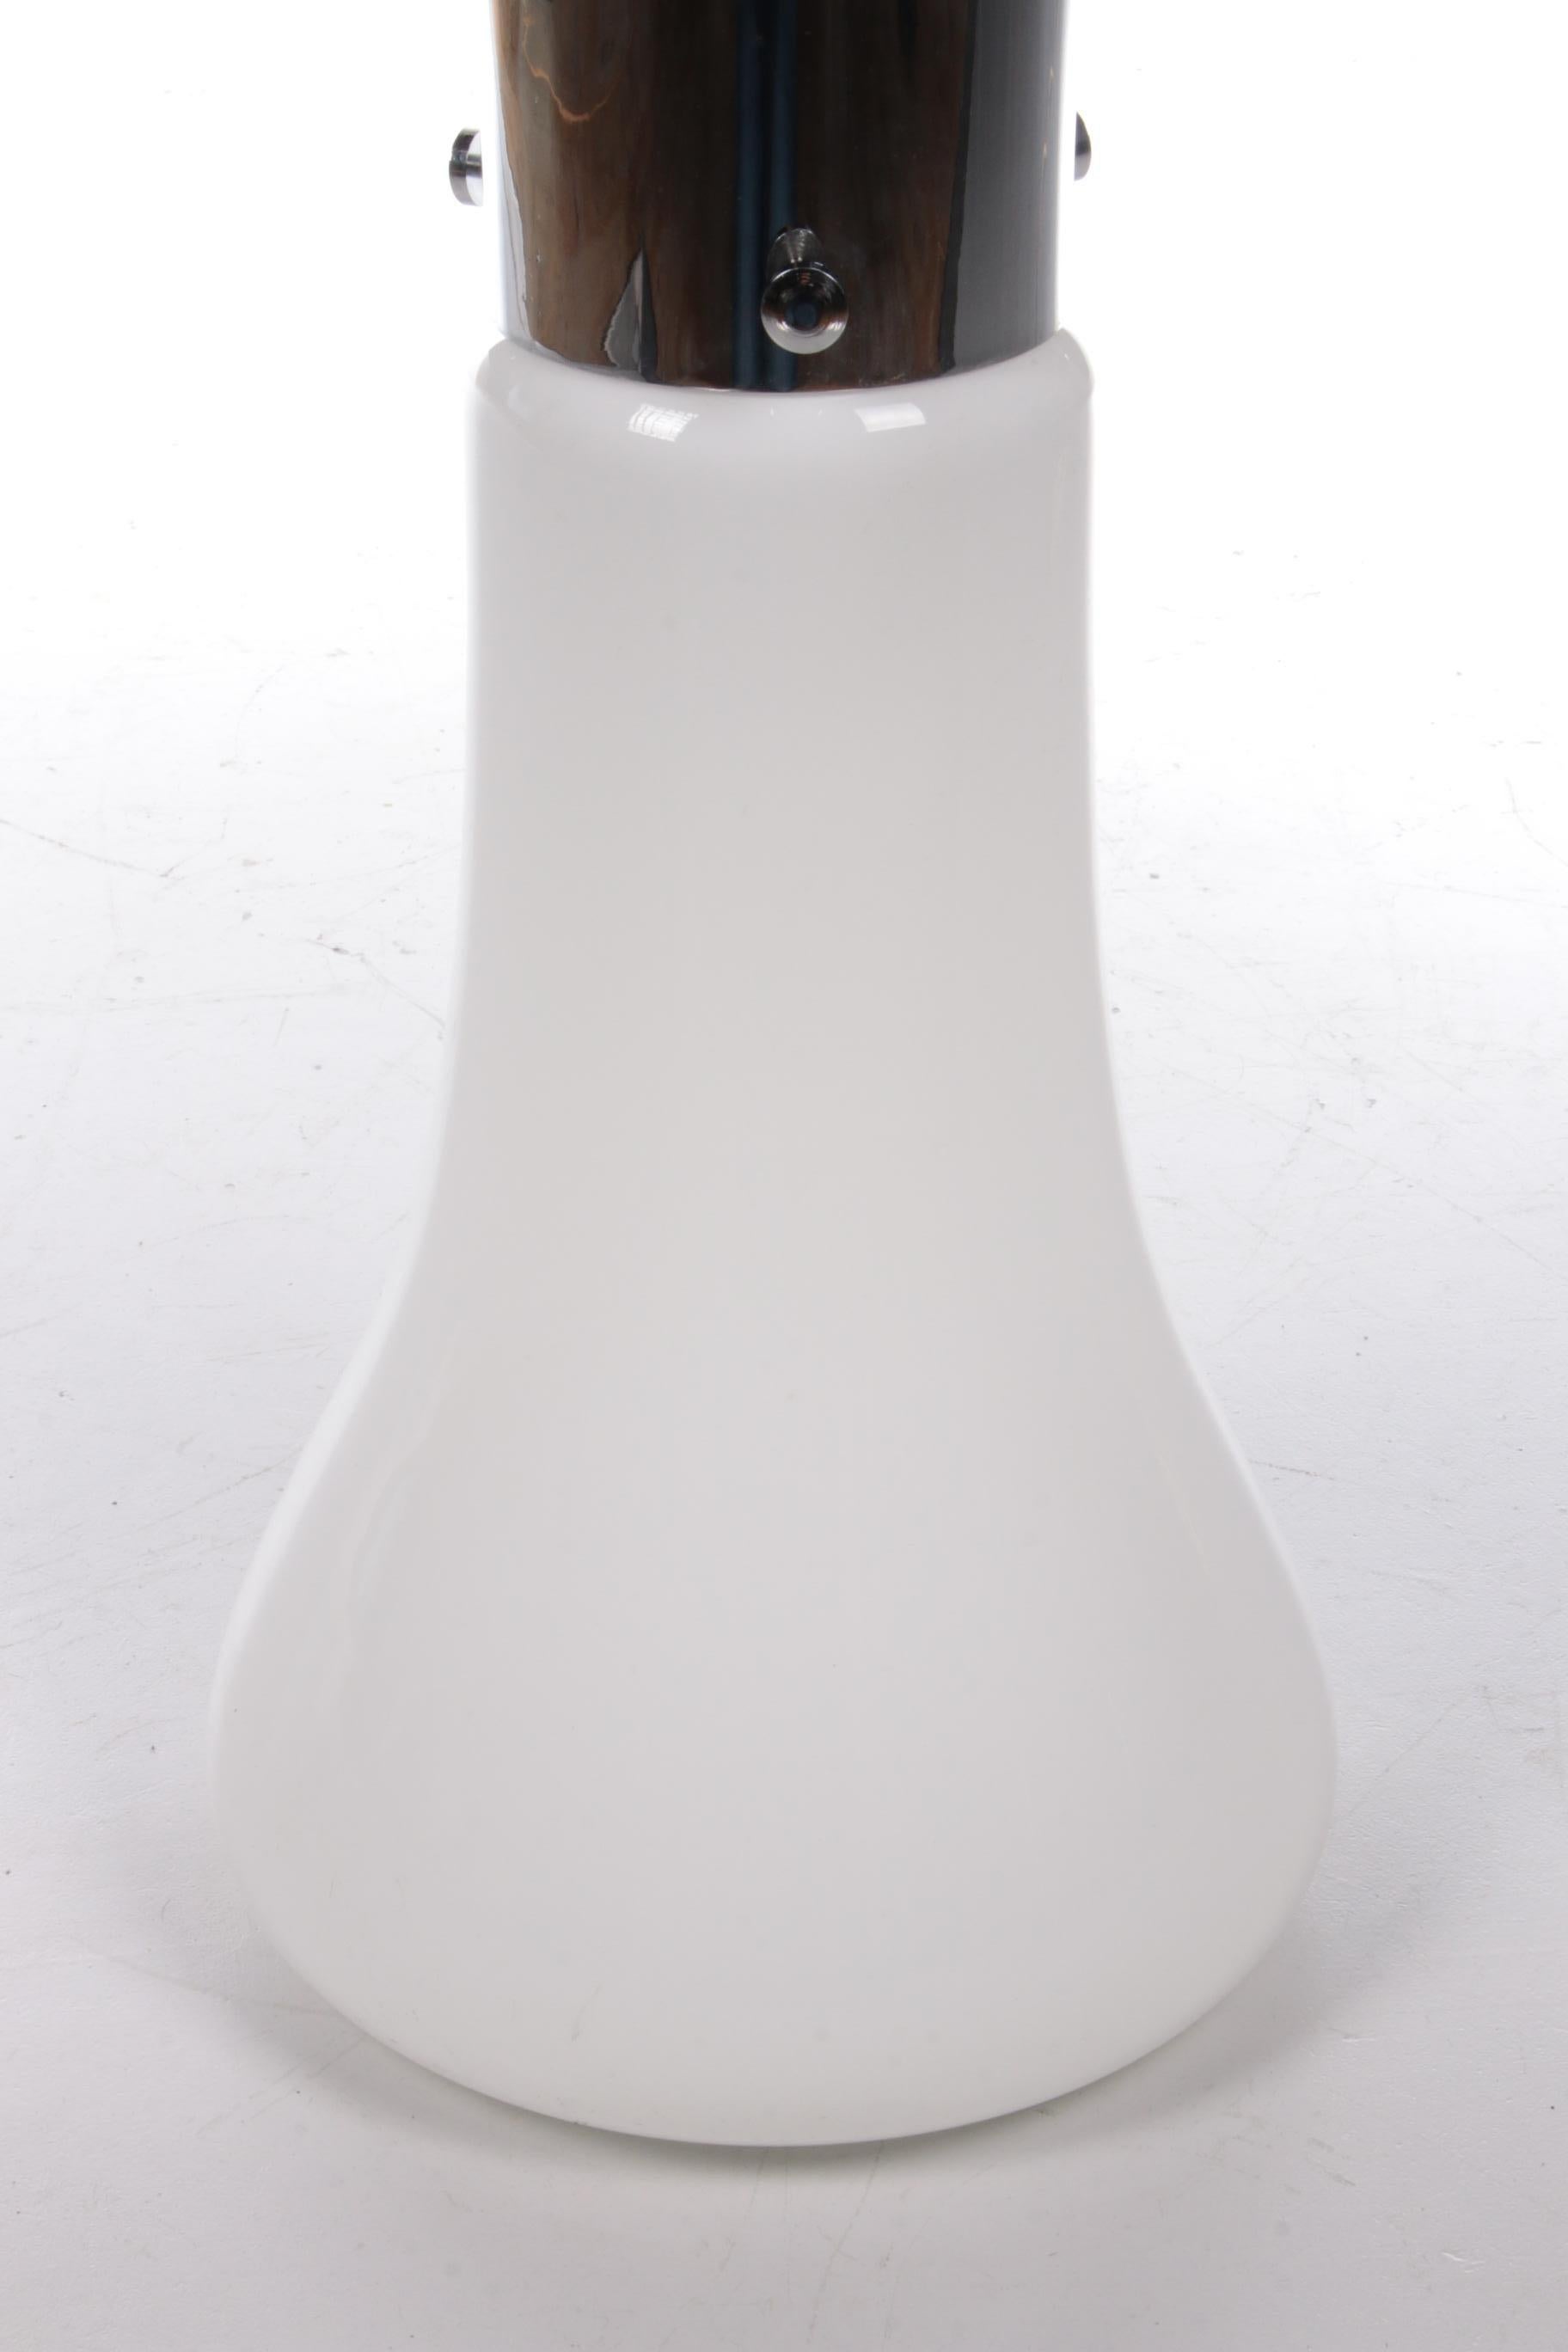 Italian White Floor Lamp in Murano Glass by Carlo Nason for Mazzega, Italy, 1960s